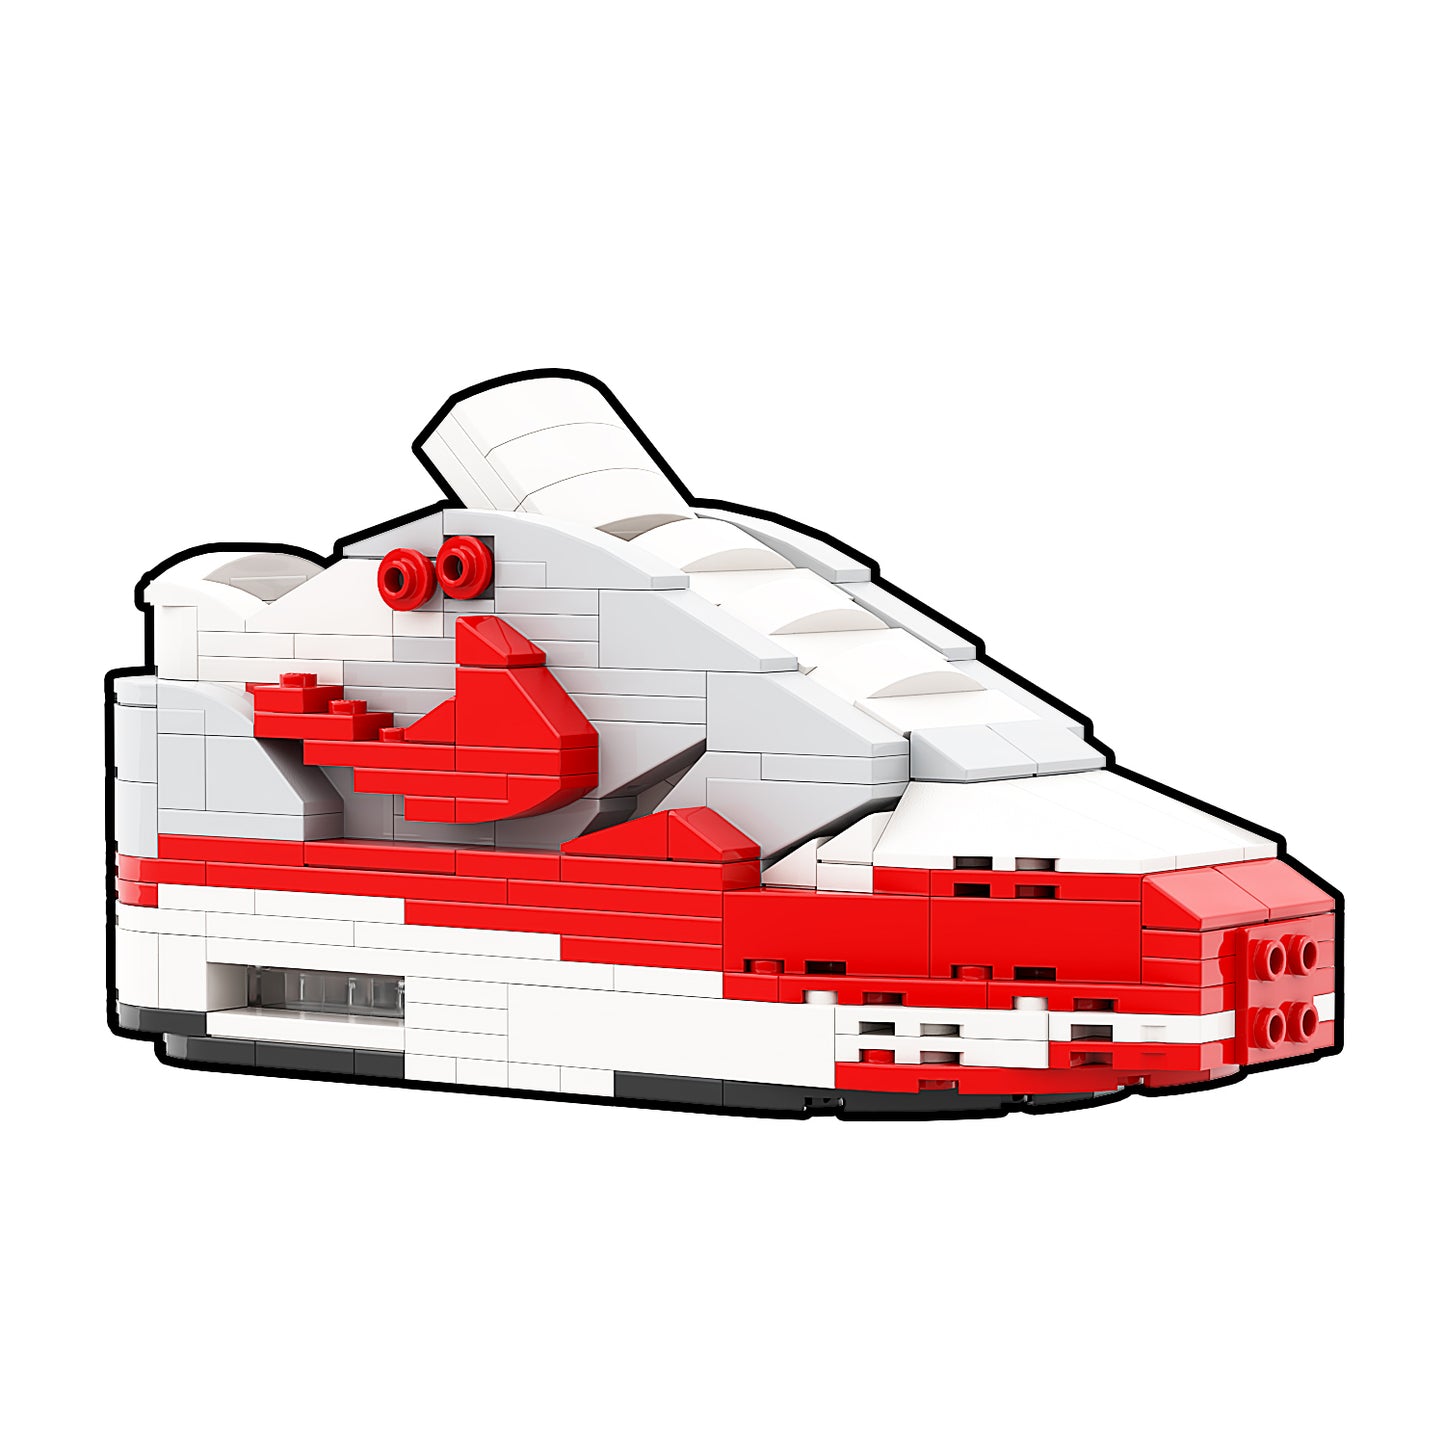 REGULAR "Air Max 1 OG" Sneaker Bricks with Mini Figure